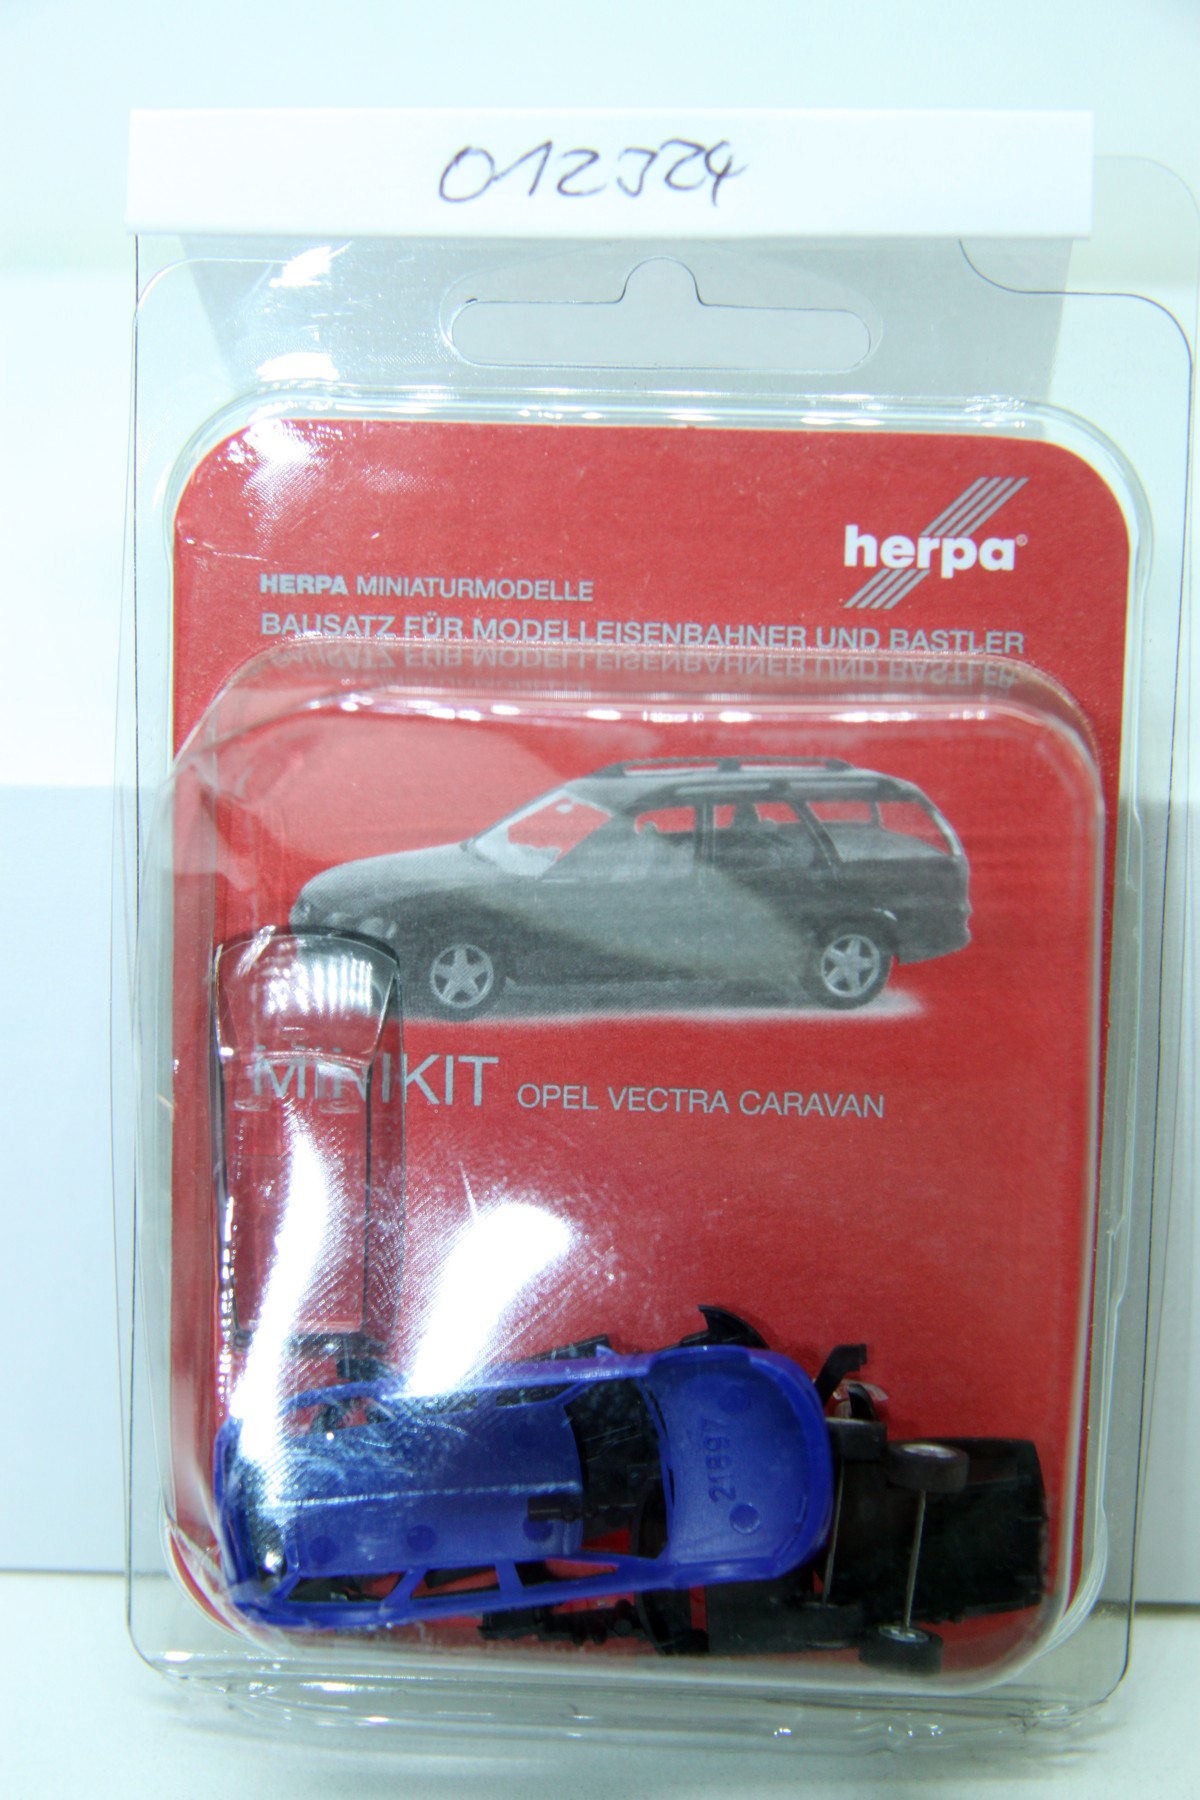 Herpa 012324, MiniKit: Opel Vectra Caravan, lilac blue for H0 gauge,